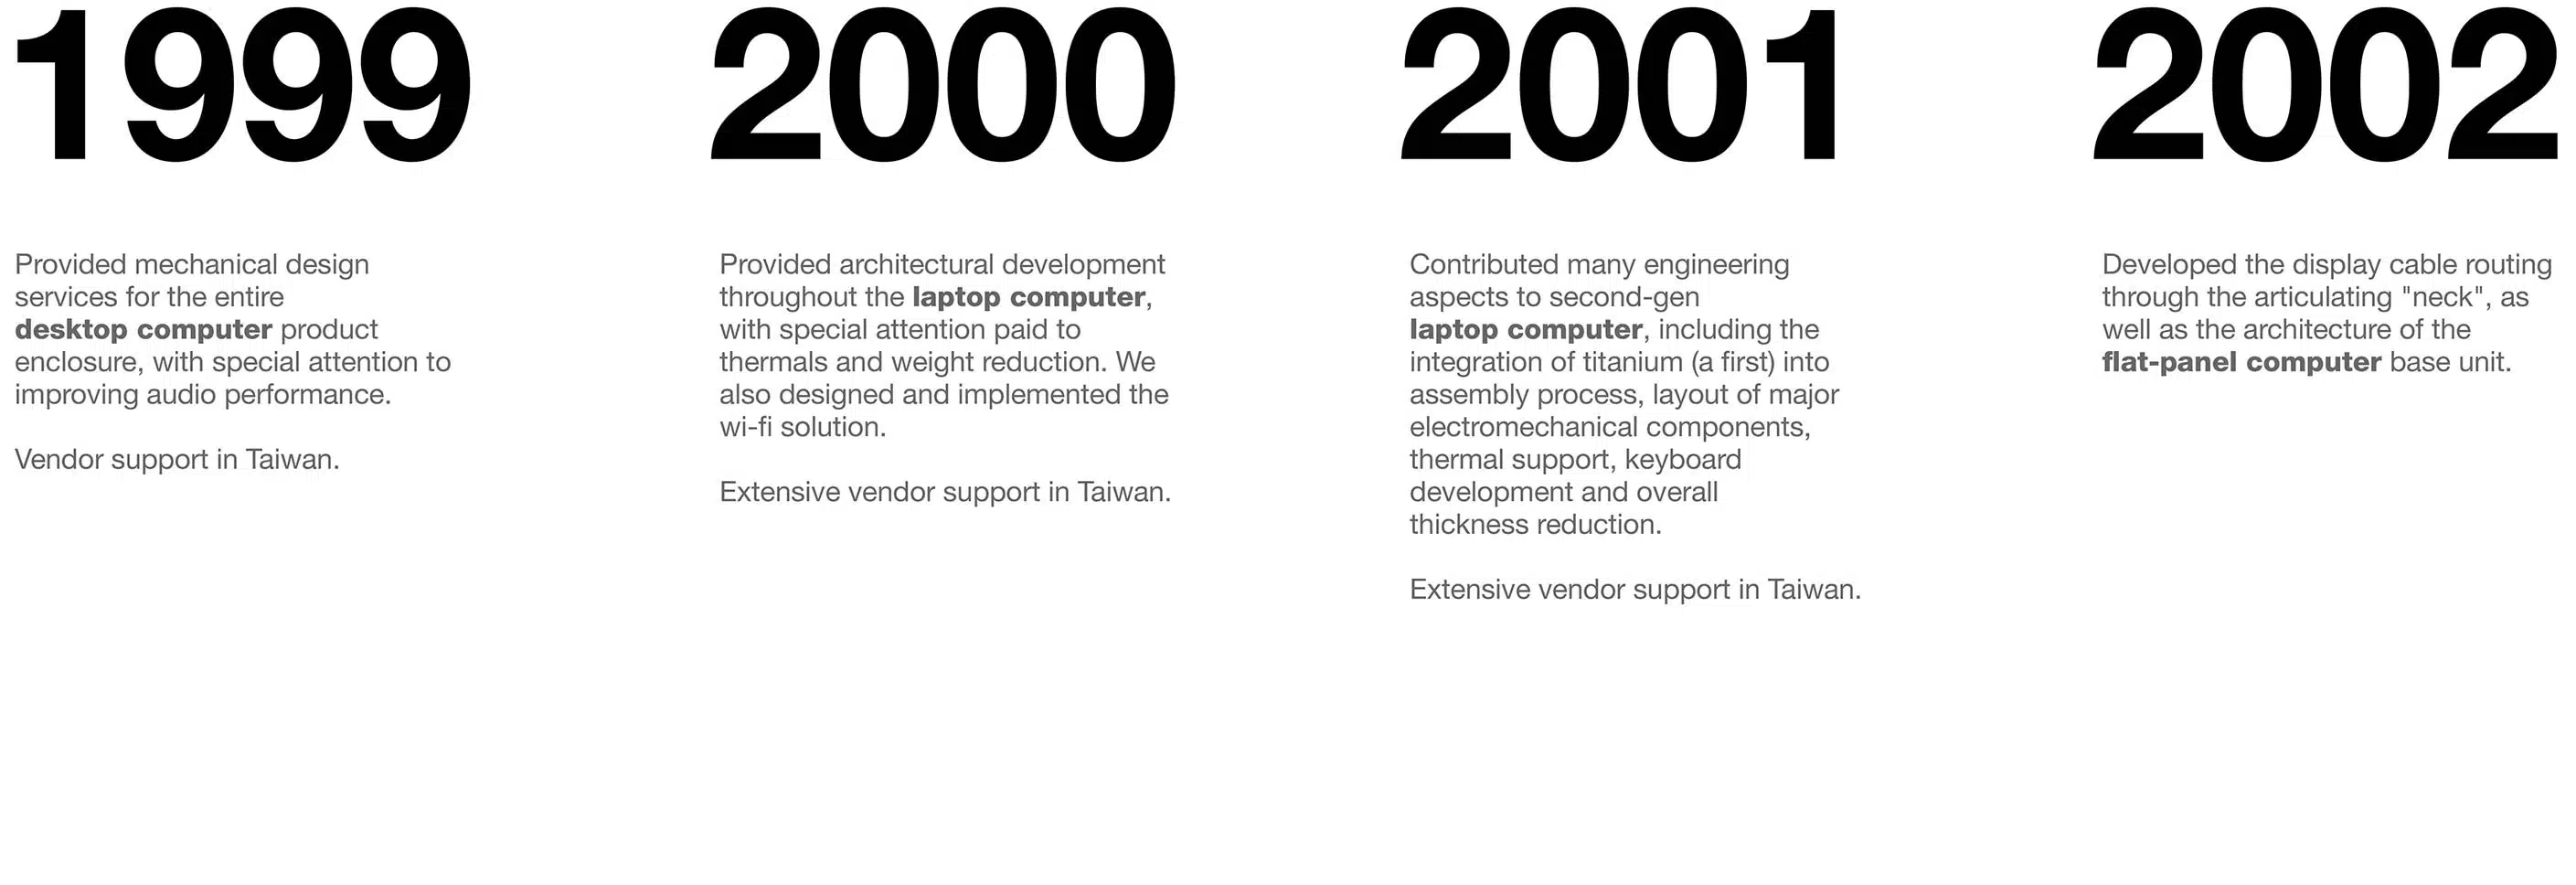 Surfaceink Timeline 1999-2002